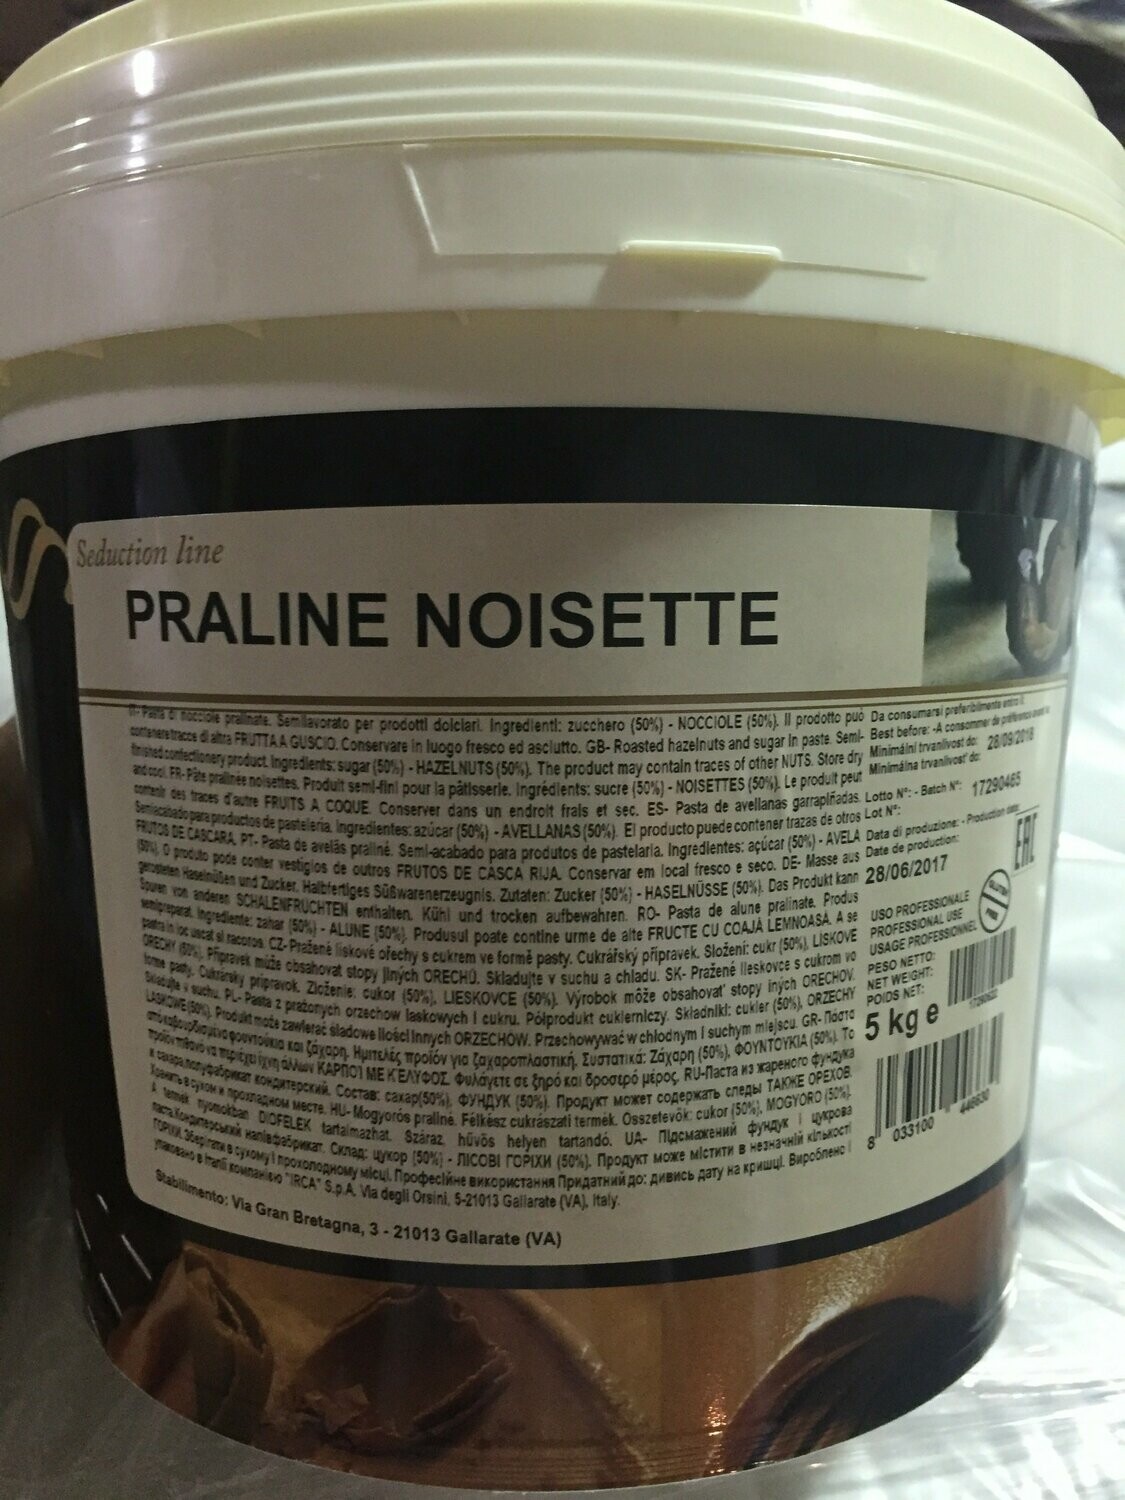 IRCA Praline Noisette